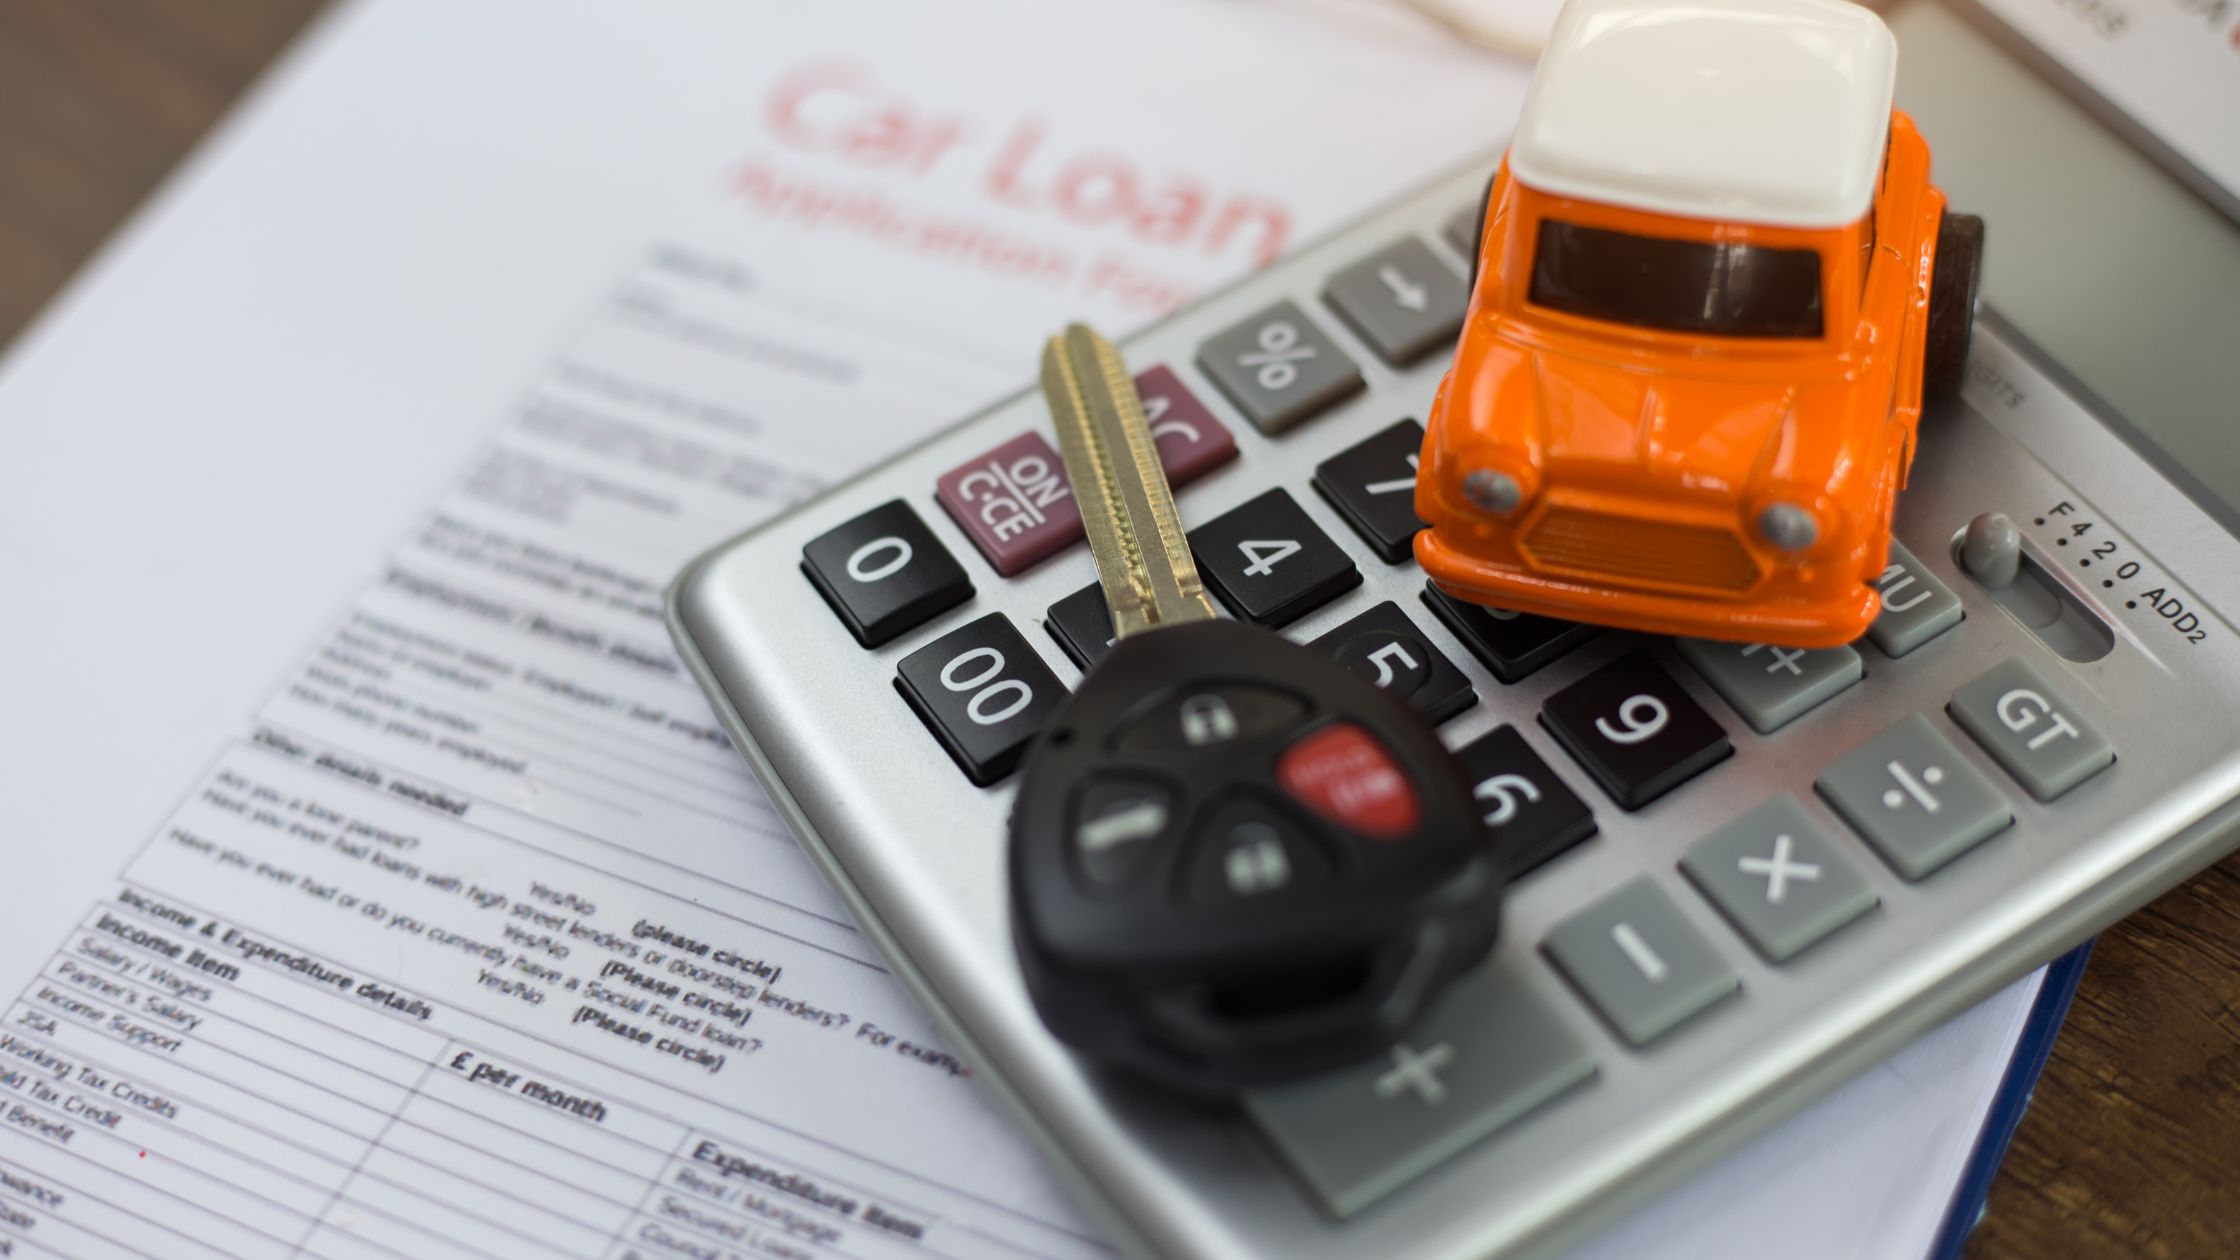 car loan paperwork with calculator and car key